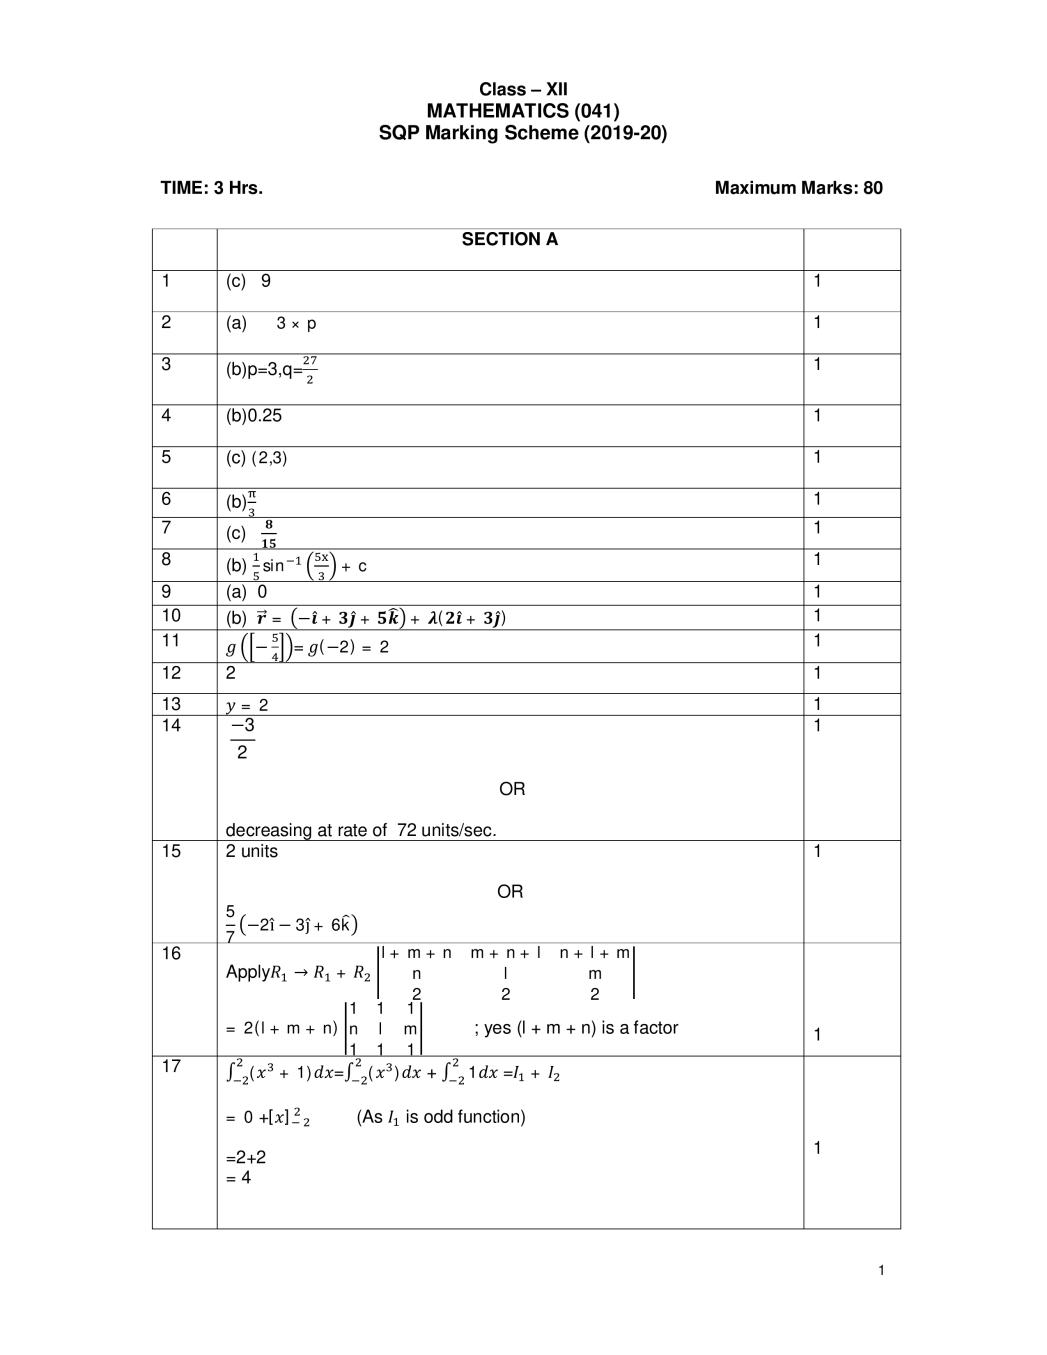 CBSE Class 12 Marking Scheme 2020 for Mathematics - Page 1